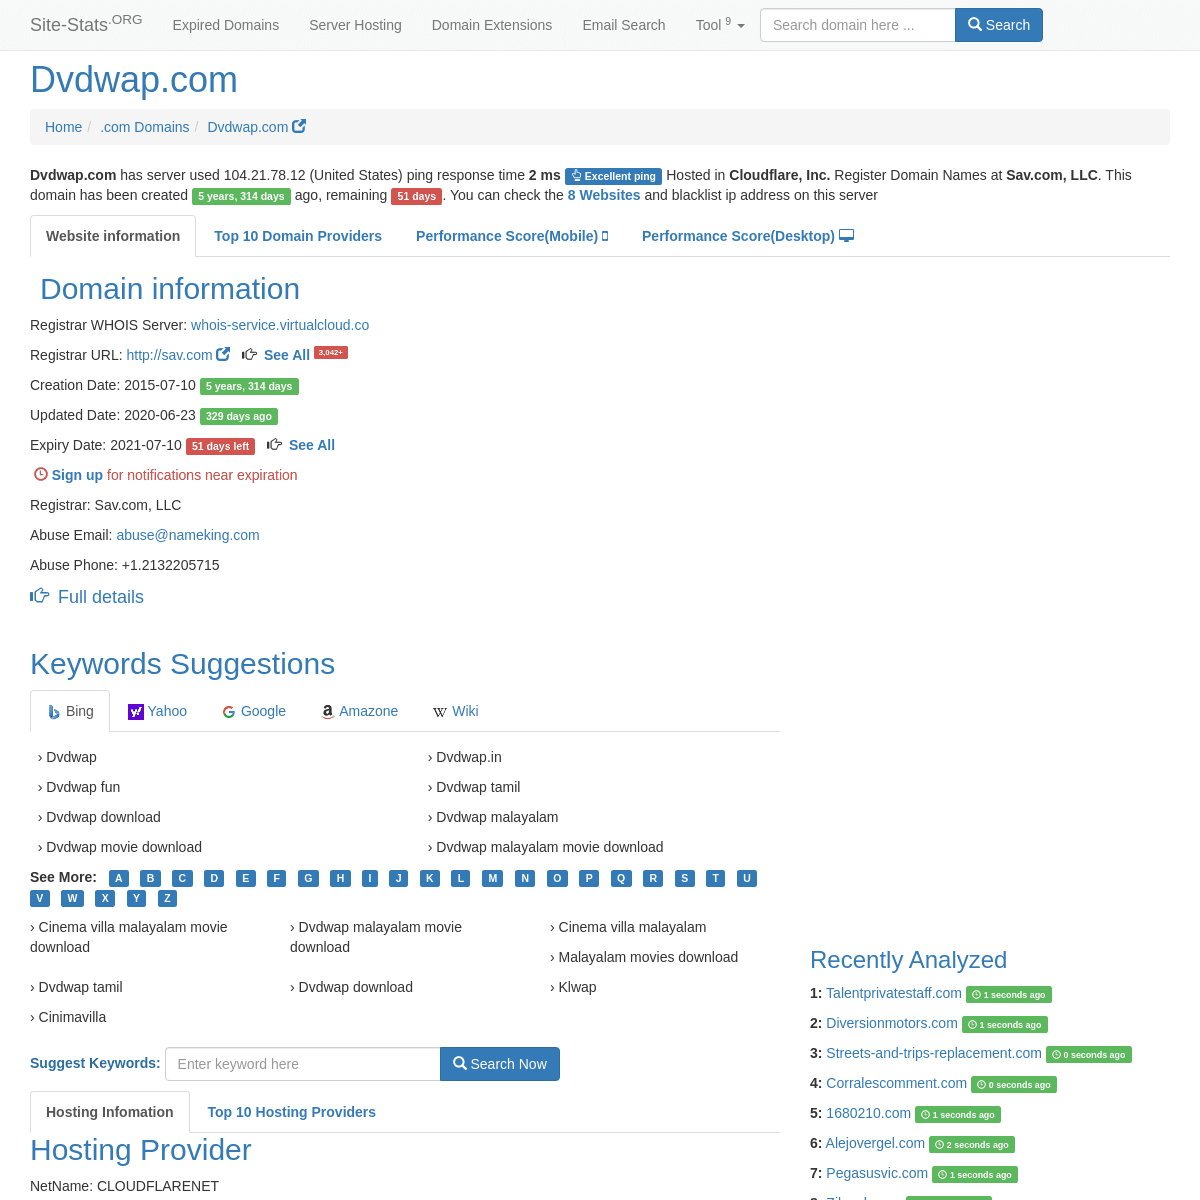 A complete backup of https://site-stats.org/dvdwap.com/